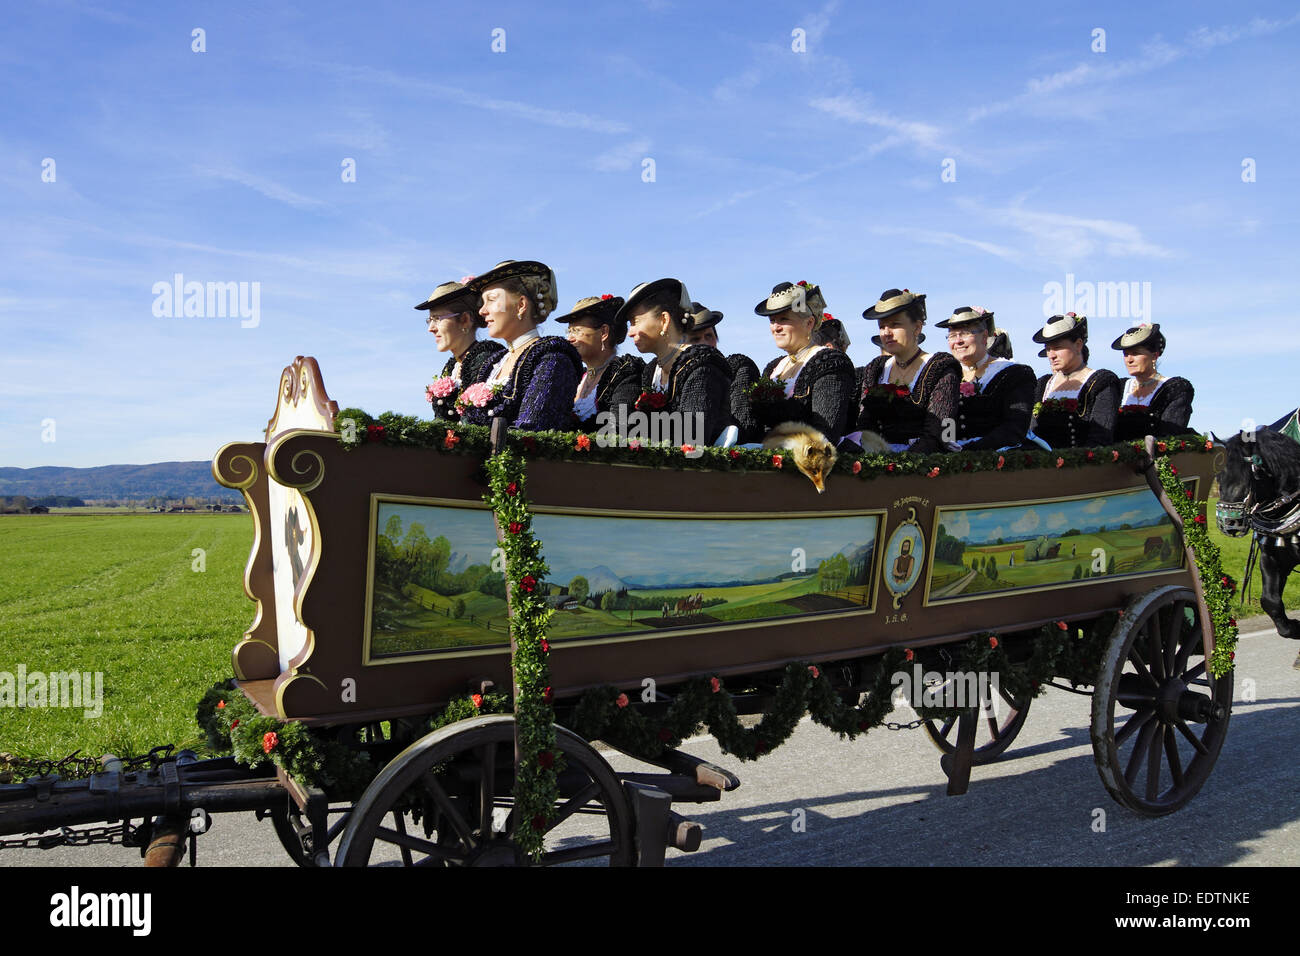 Leonhardifahrt in Benediktbeuren, Oberbayern, Deutschland,Traditional Leonhard Parade, Leonhardifahrt in Benediktbeuern, Upper B Stock Photo